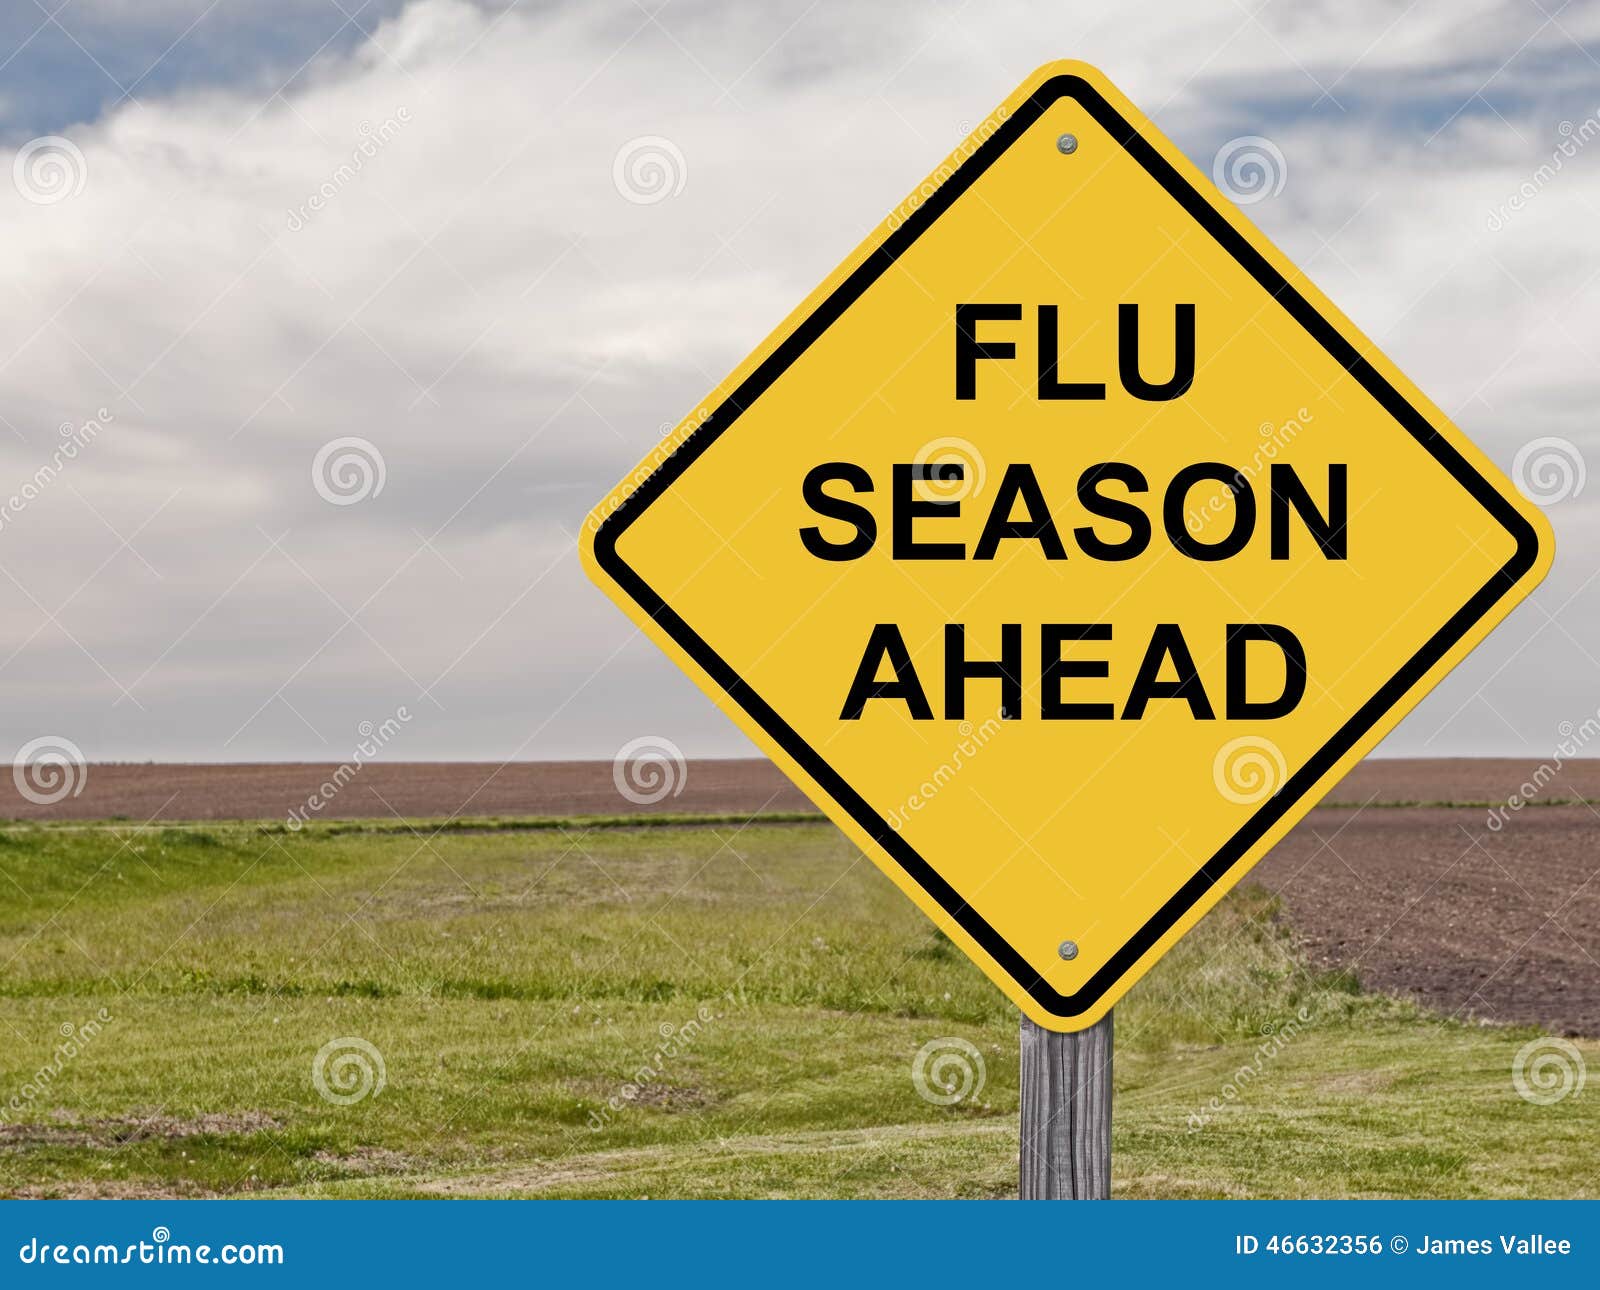 caution - flu season ahead